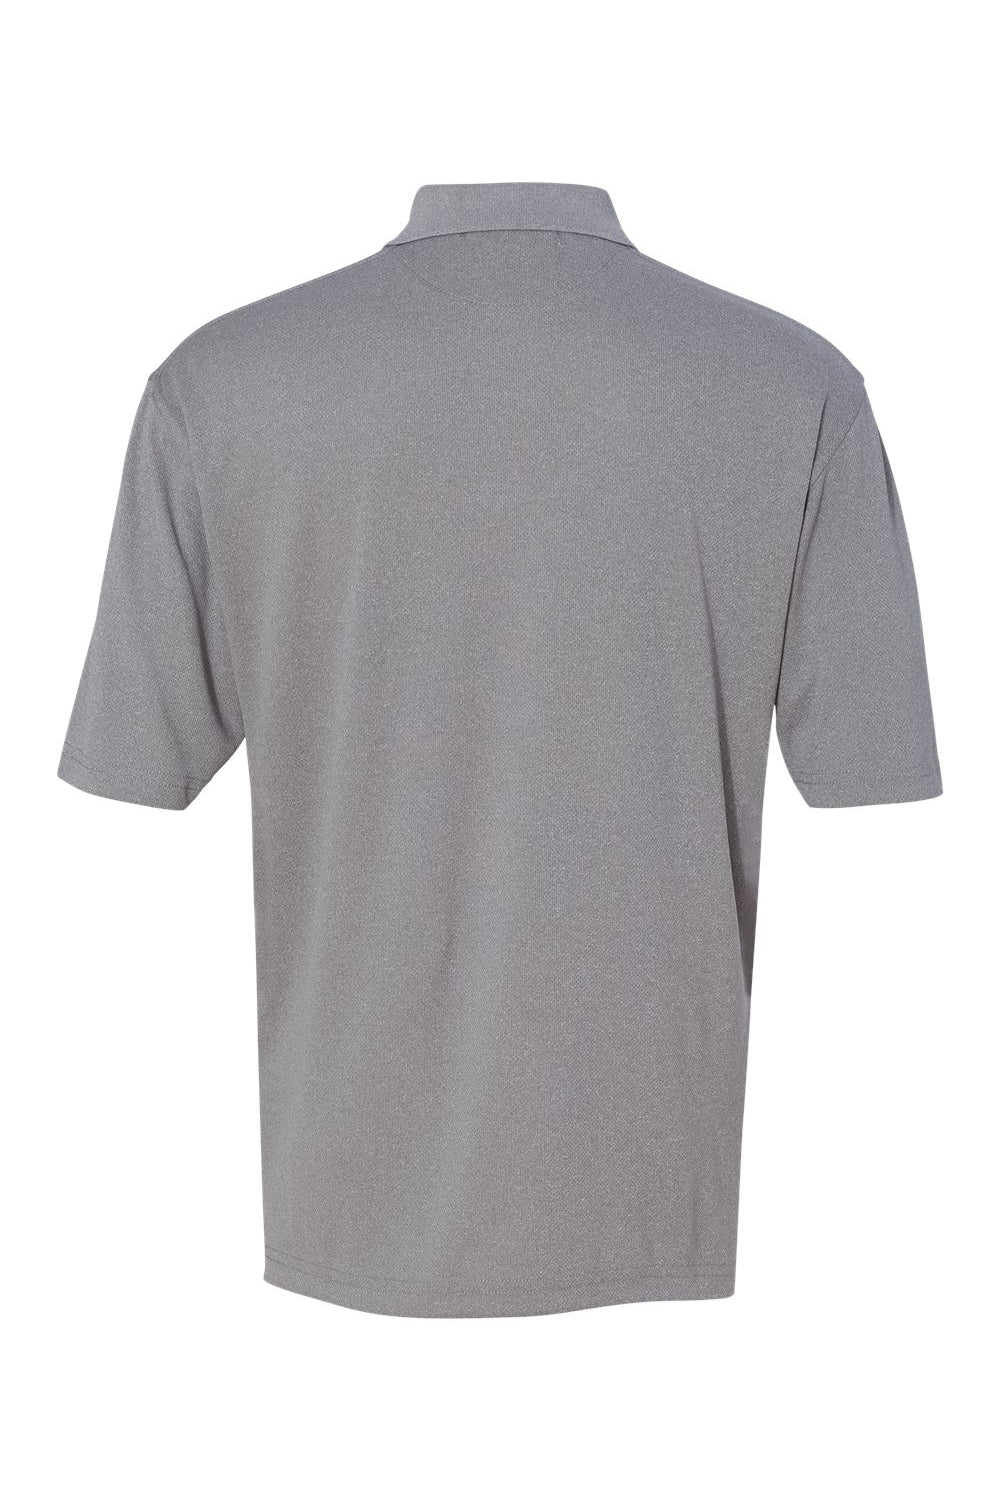 Sierra Pacific 0469 Mens Moisture Wish Mesh Short Sleeve Polo Shirt Heather Steel Grey Flat Back